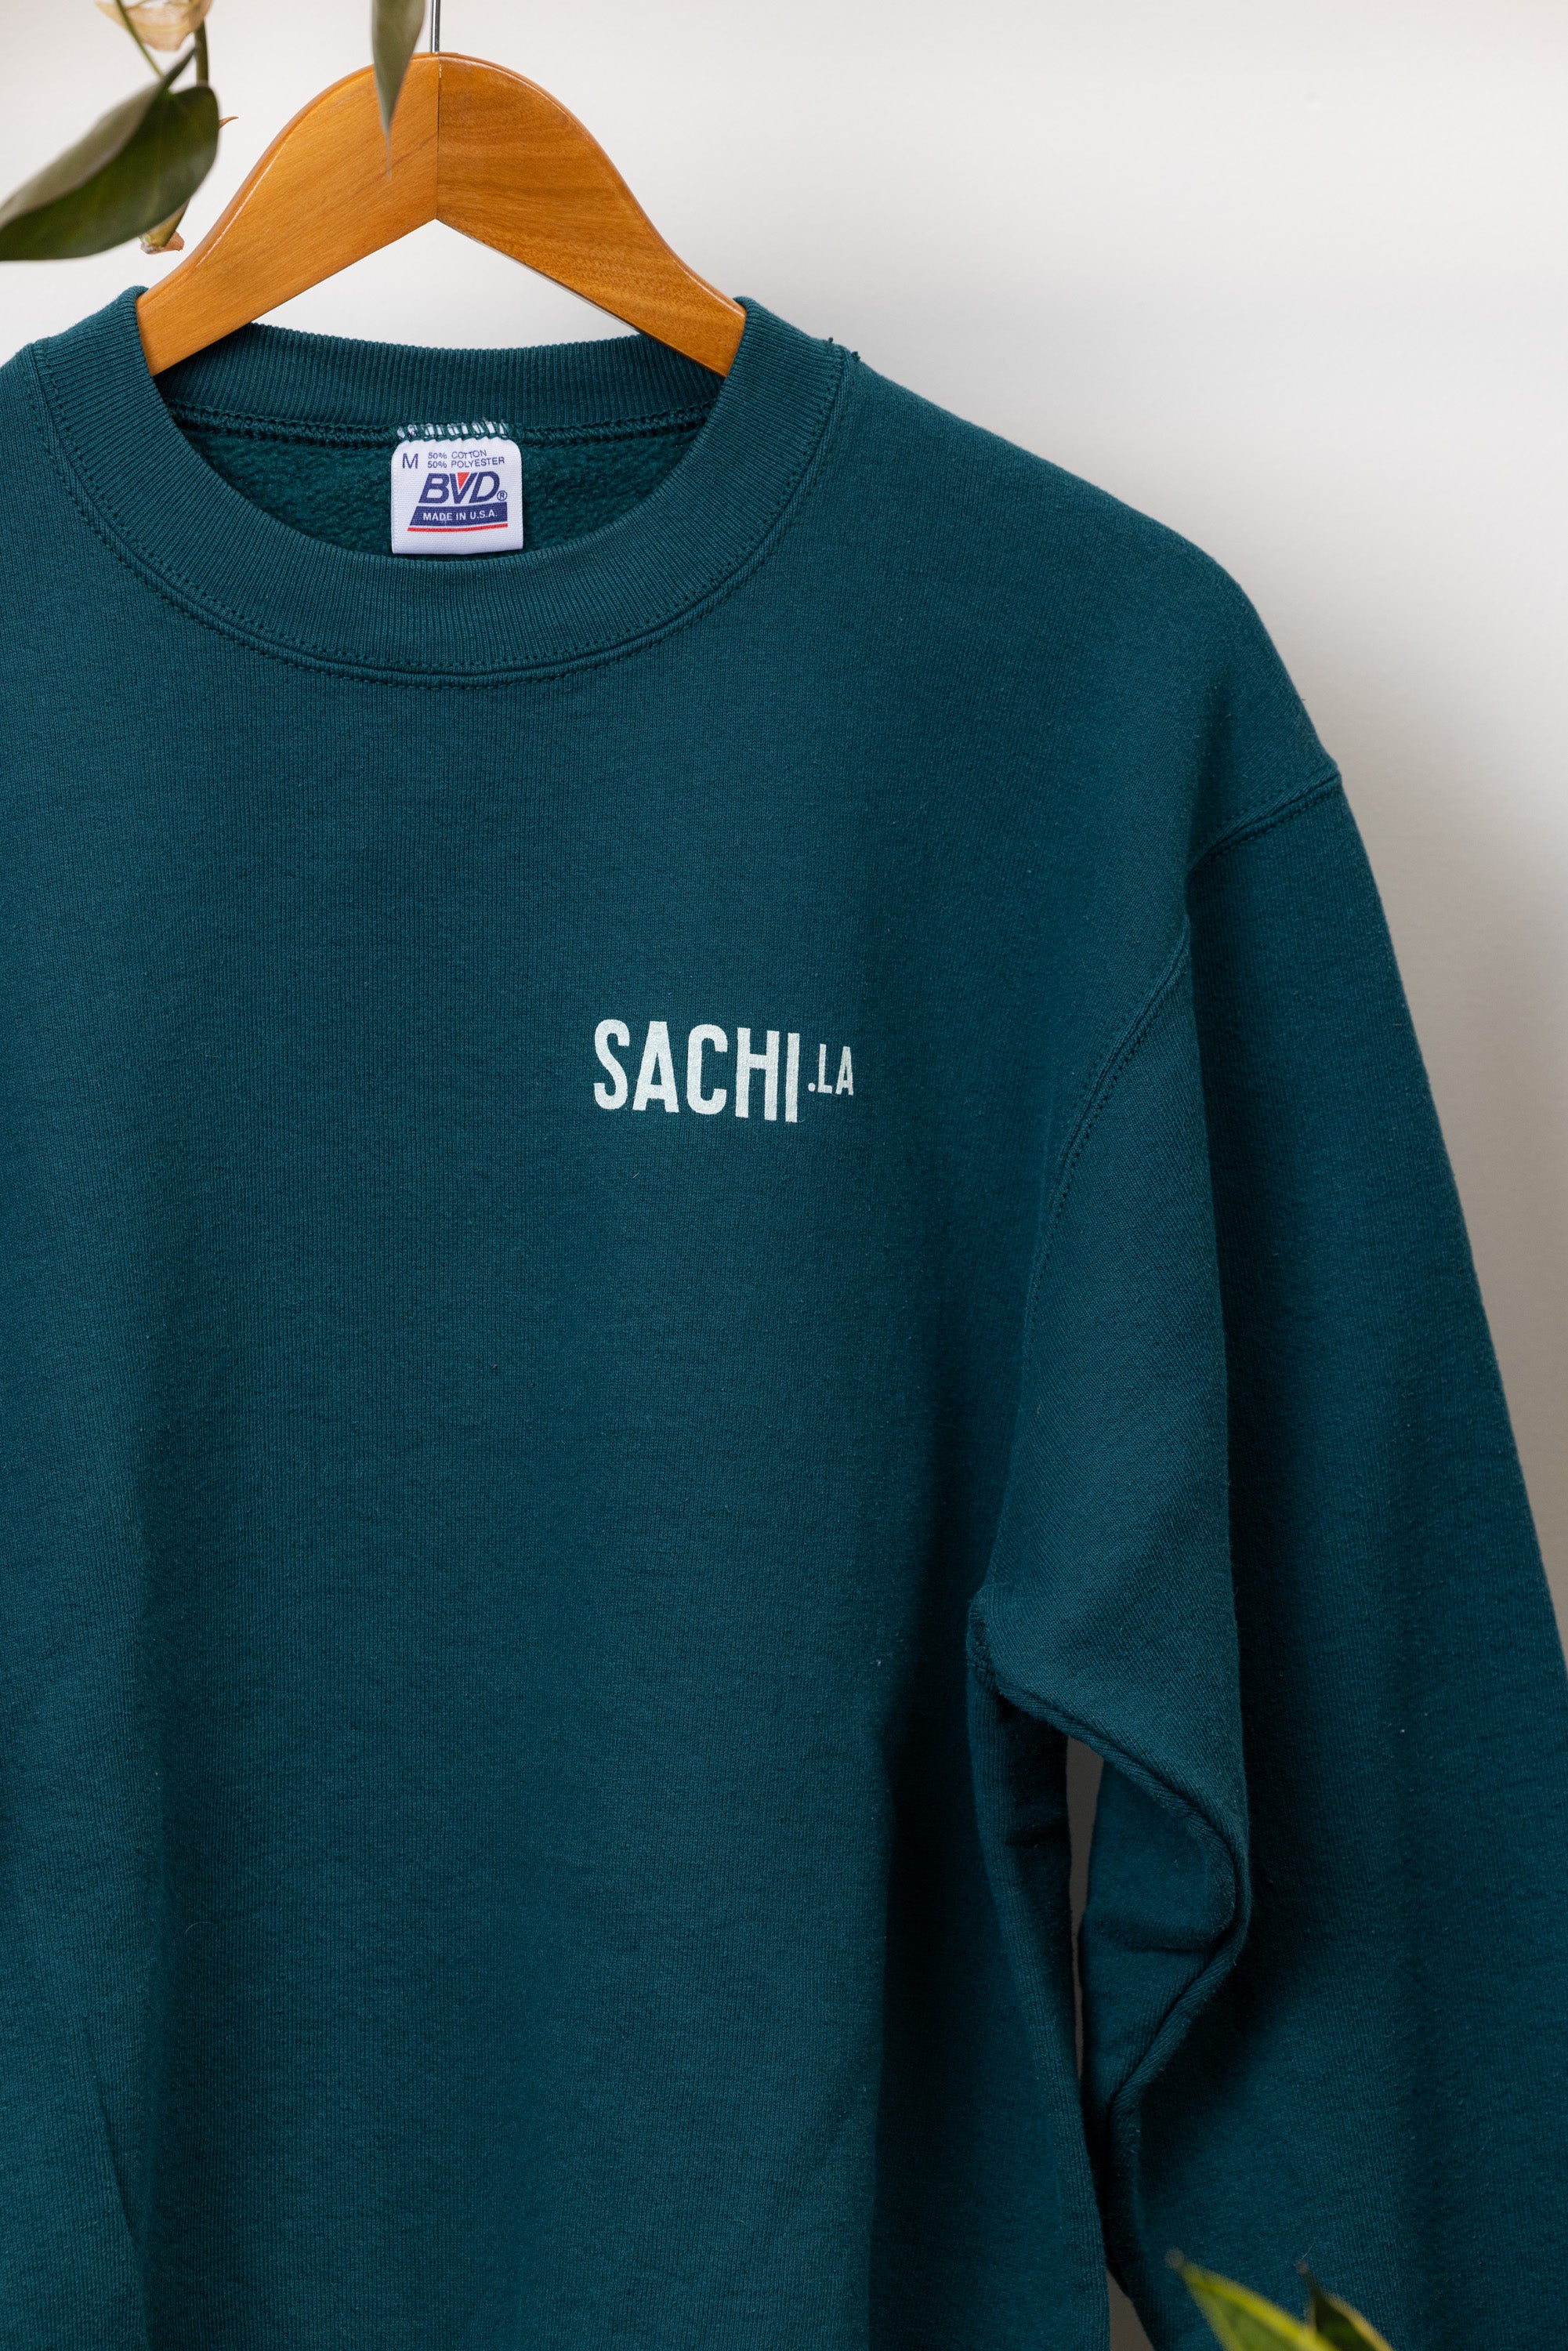 Peacock SACHI.LA Vintage Crewneck Sweatshirt